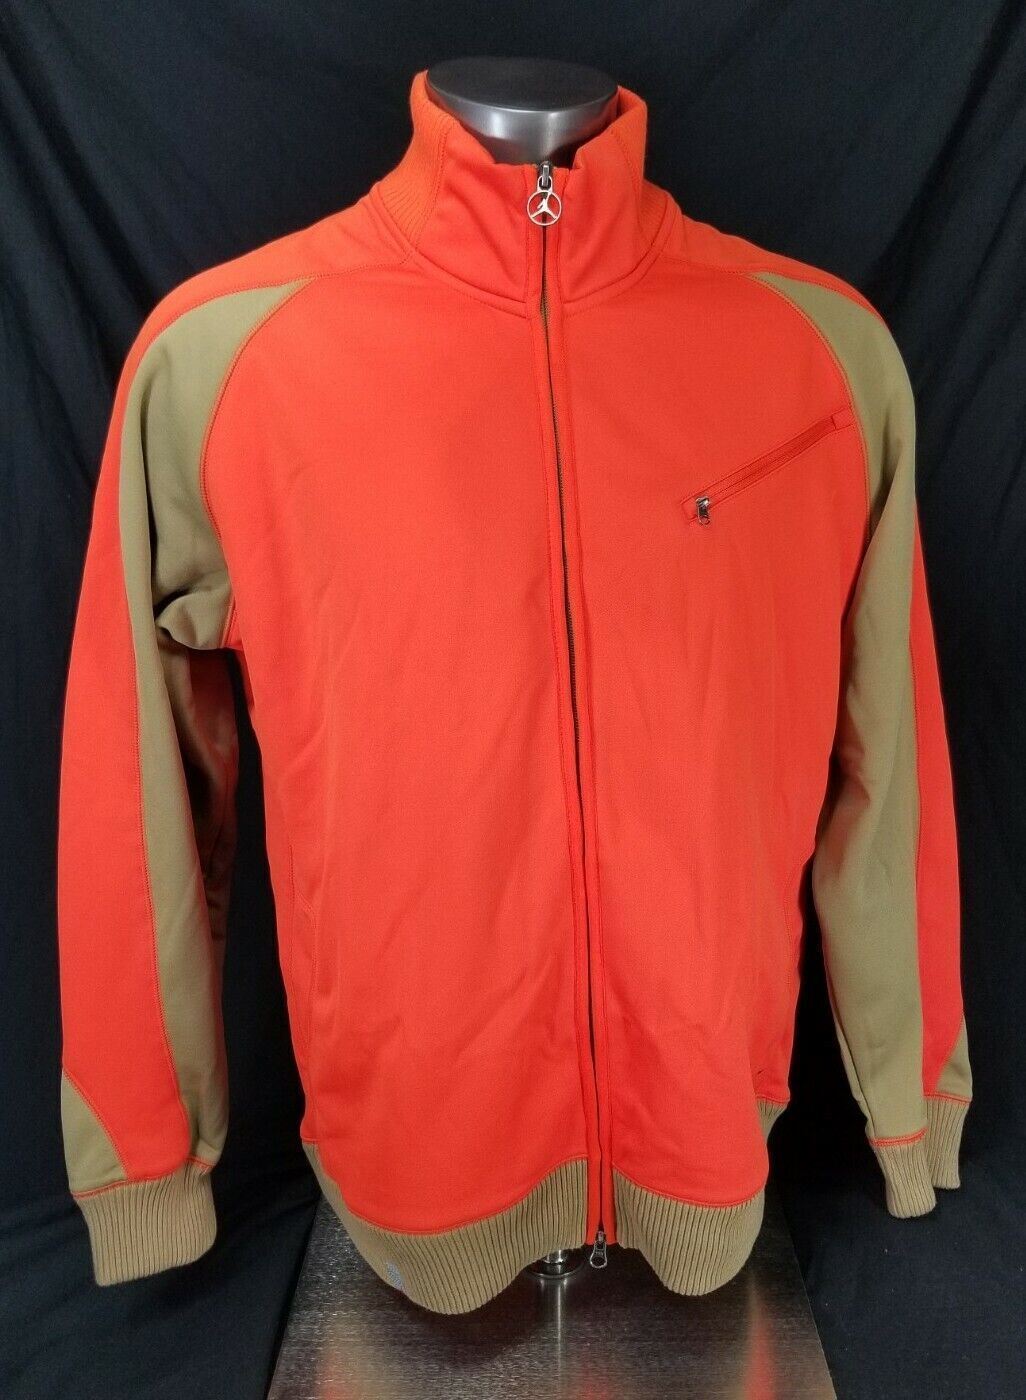 Helpful 2011 Nike Air Jordan Basketball Jacket Thermal SZ 2XL Orange Beige Dri Fit on eBay